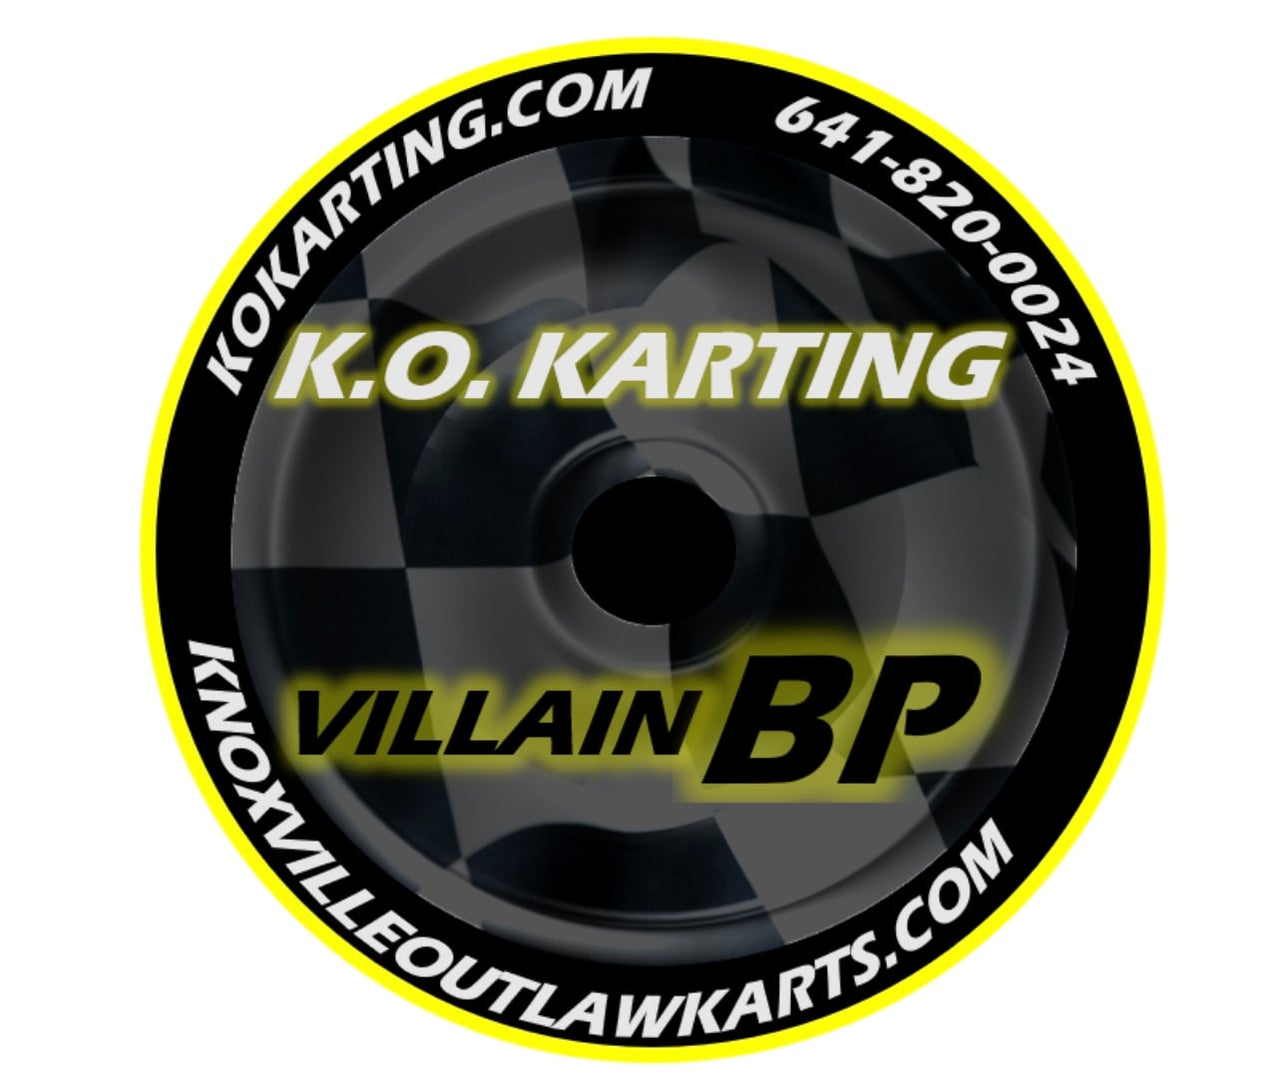 QRC - Championship Outlaw Karts Since 1985 – QRC Karts